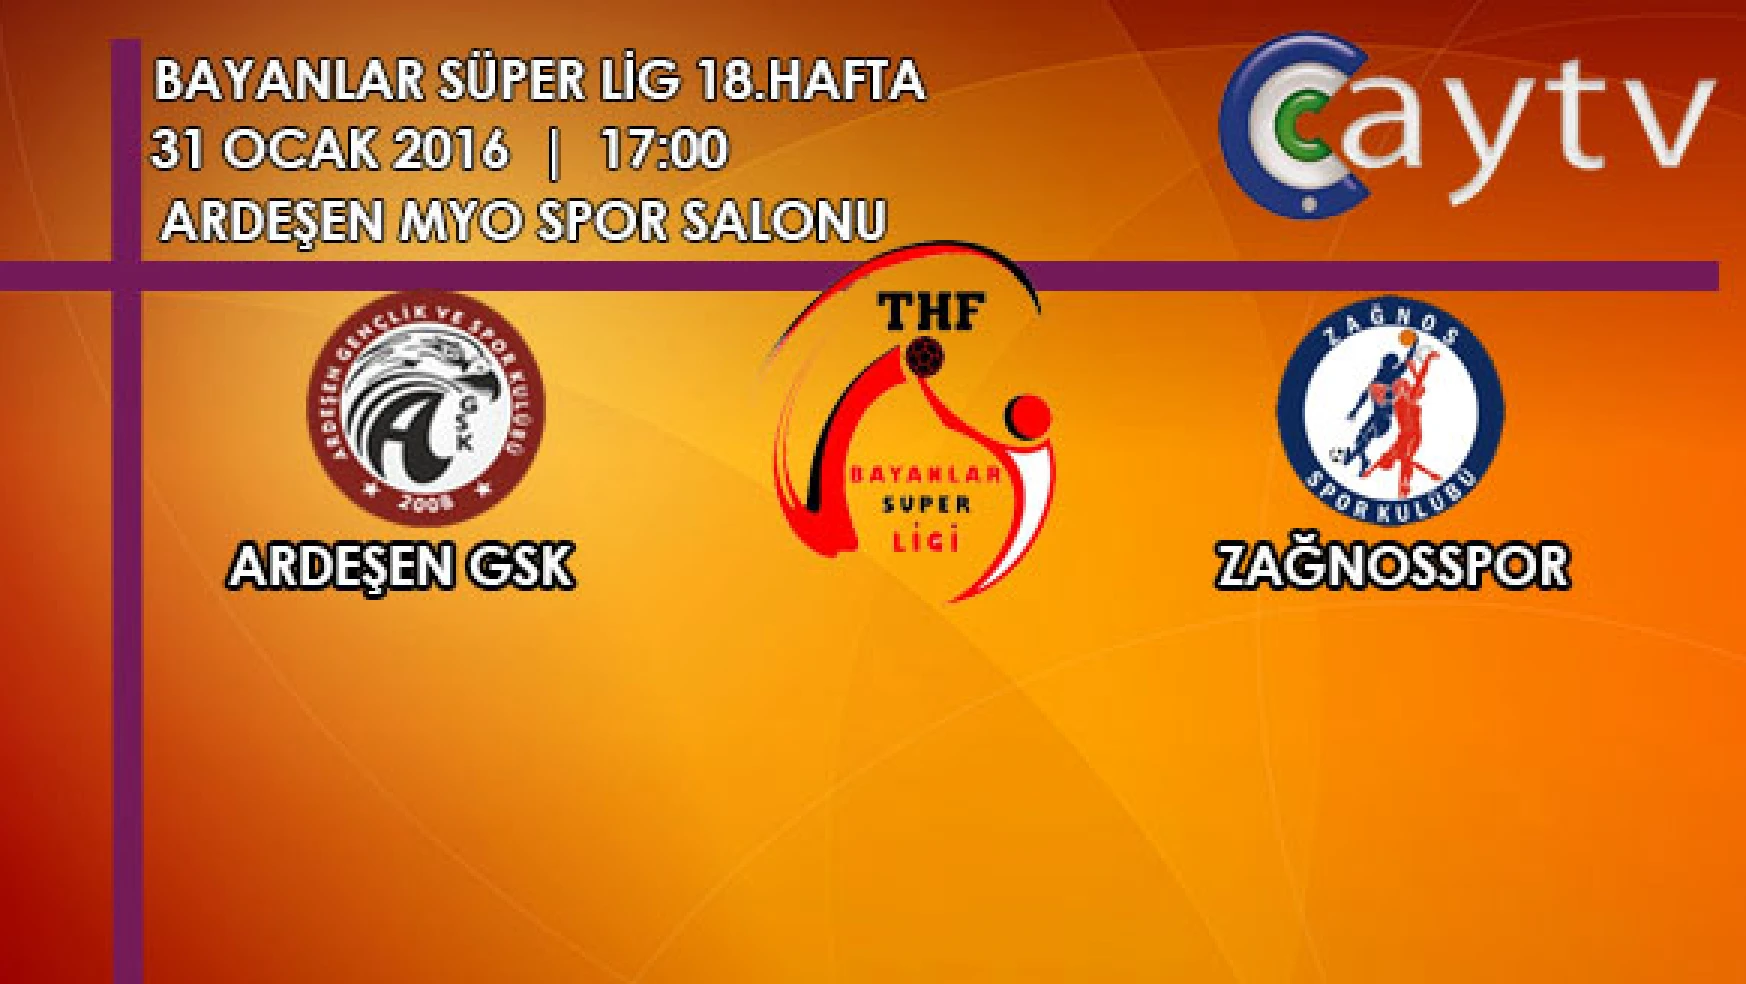 Ardeşen Gençlikspor – Zağnosspor maçı ÇAY TV’de